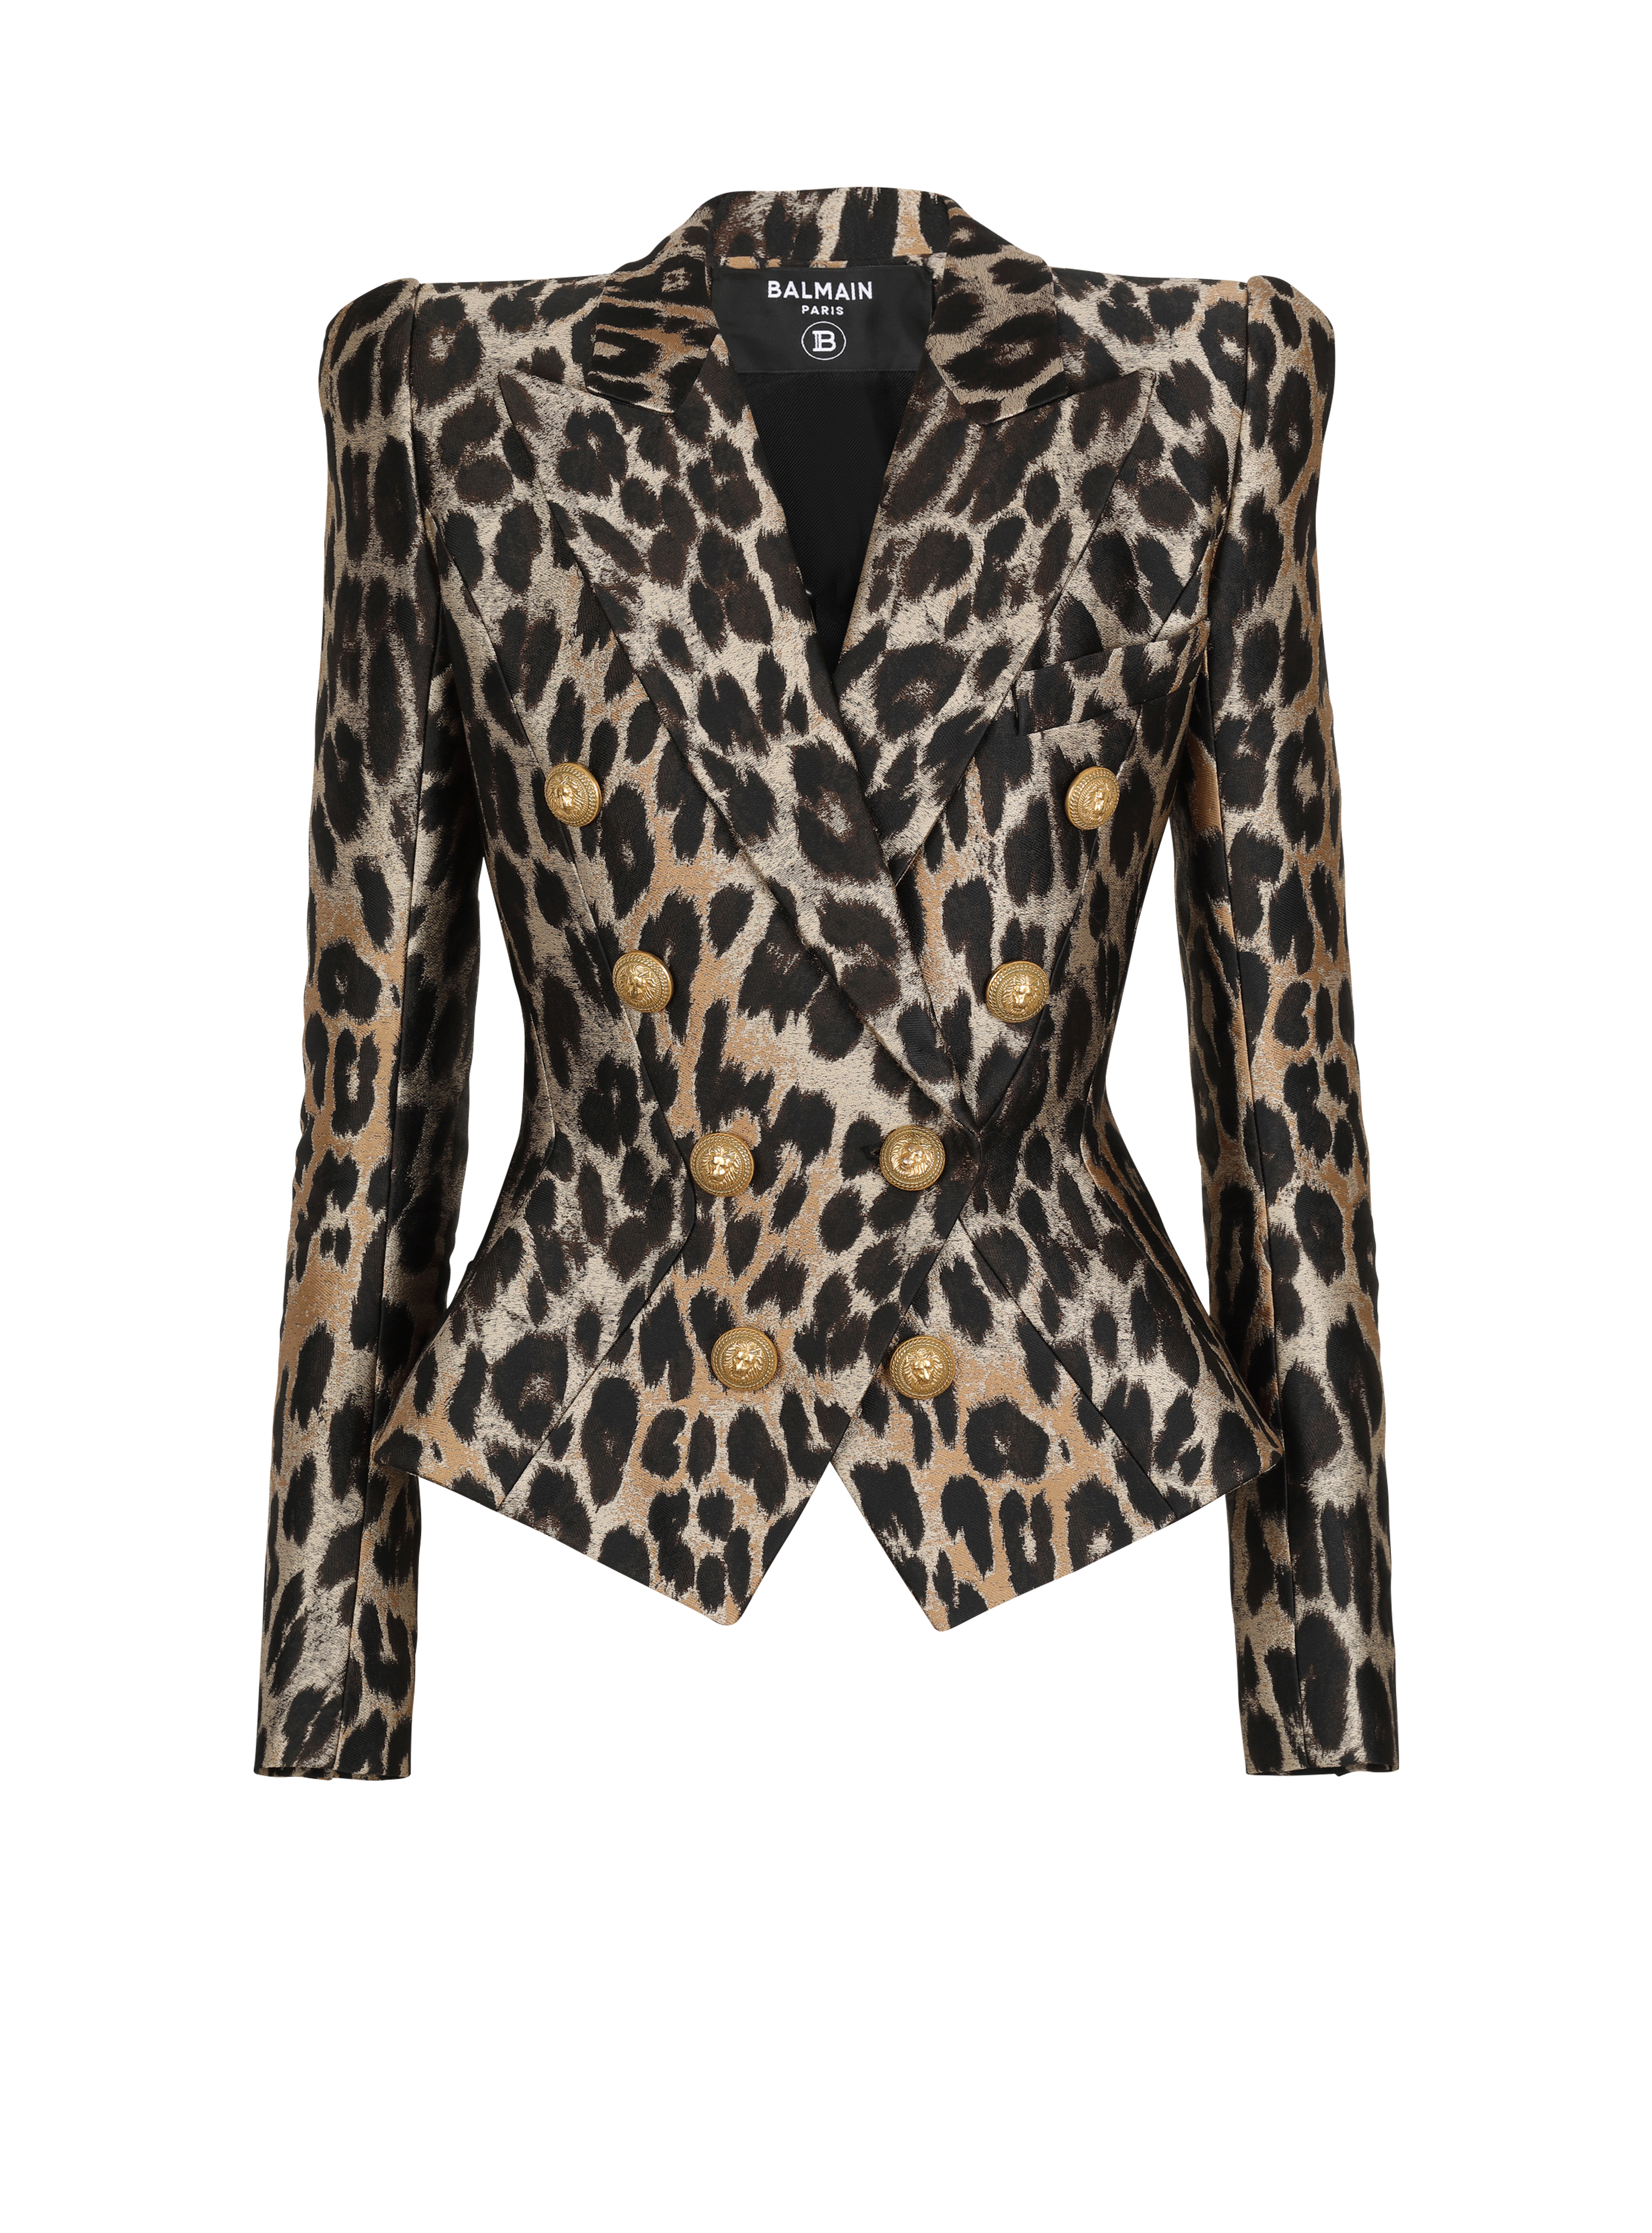 Slim-fit jacket in leopard jacquard, brown